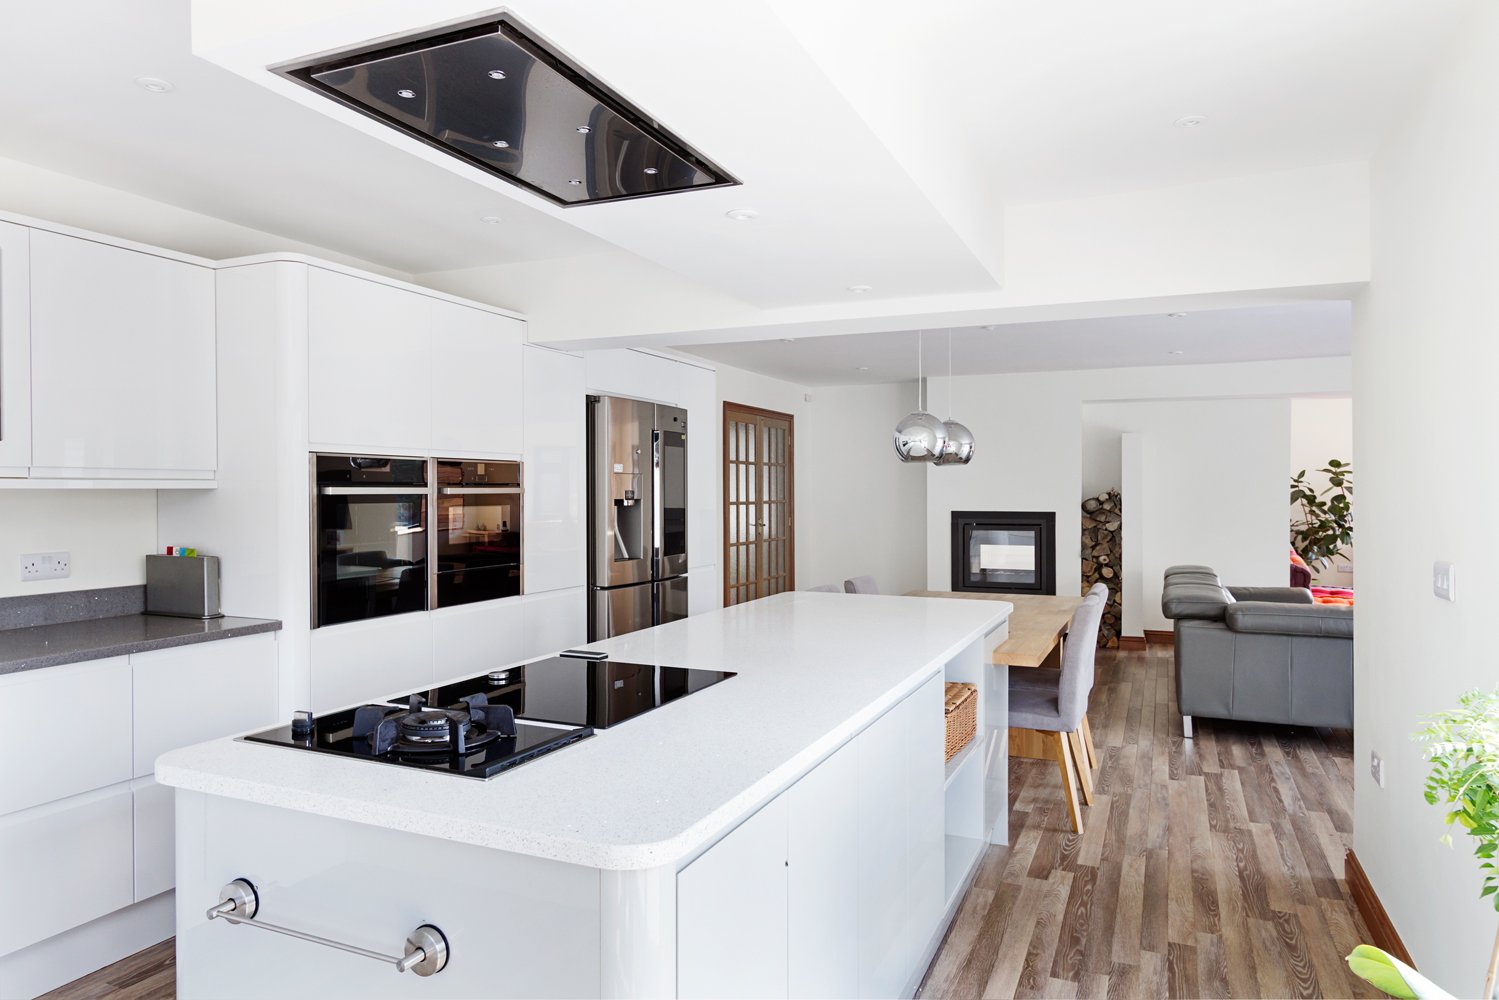 Croft Architecture - Kitchen Design - Home Renovation